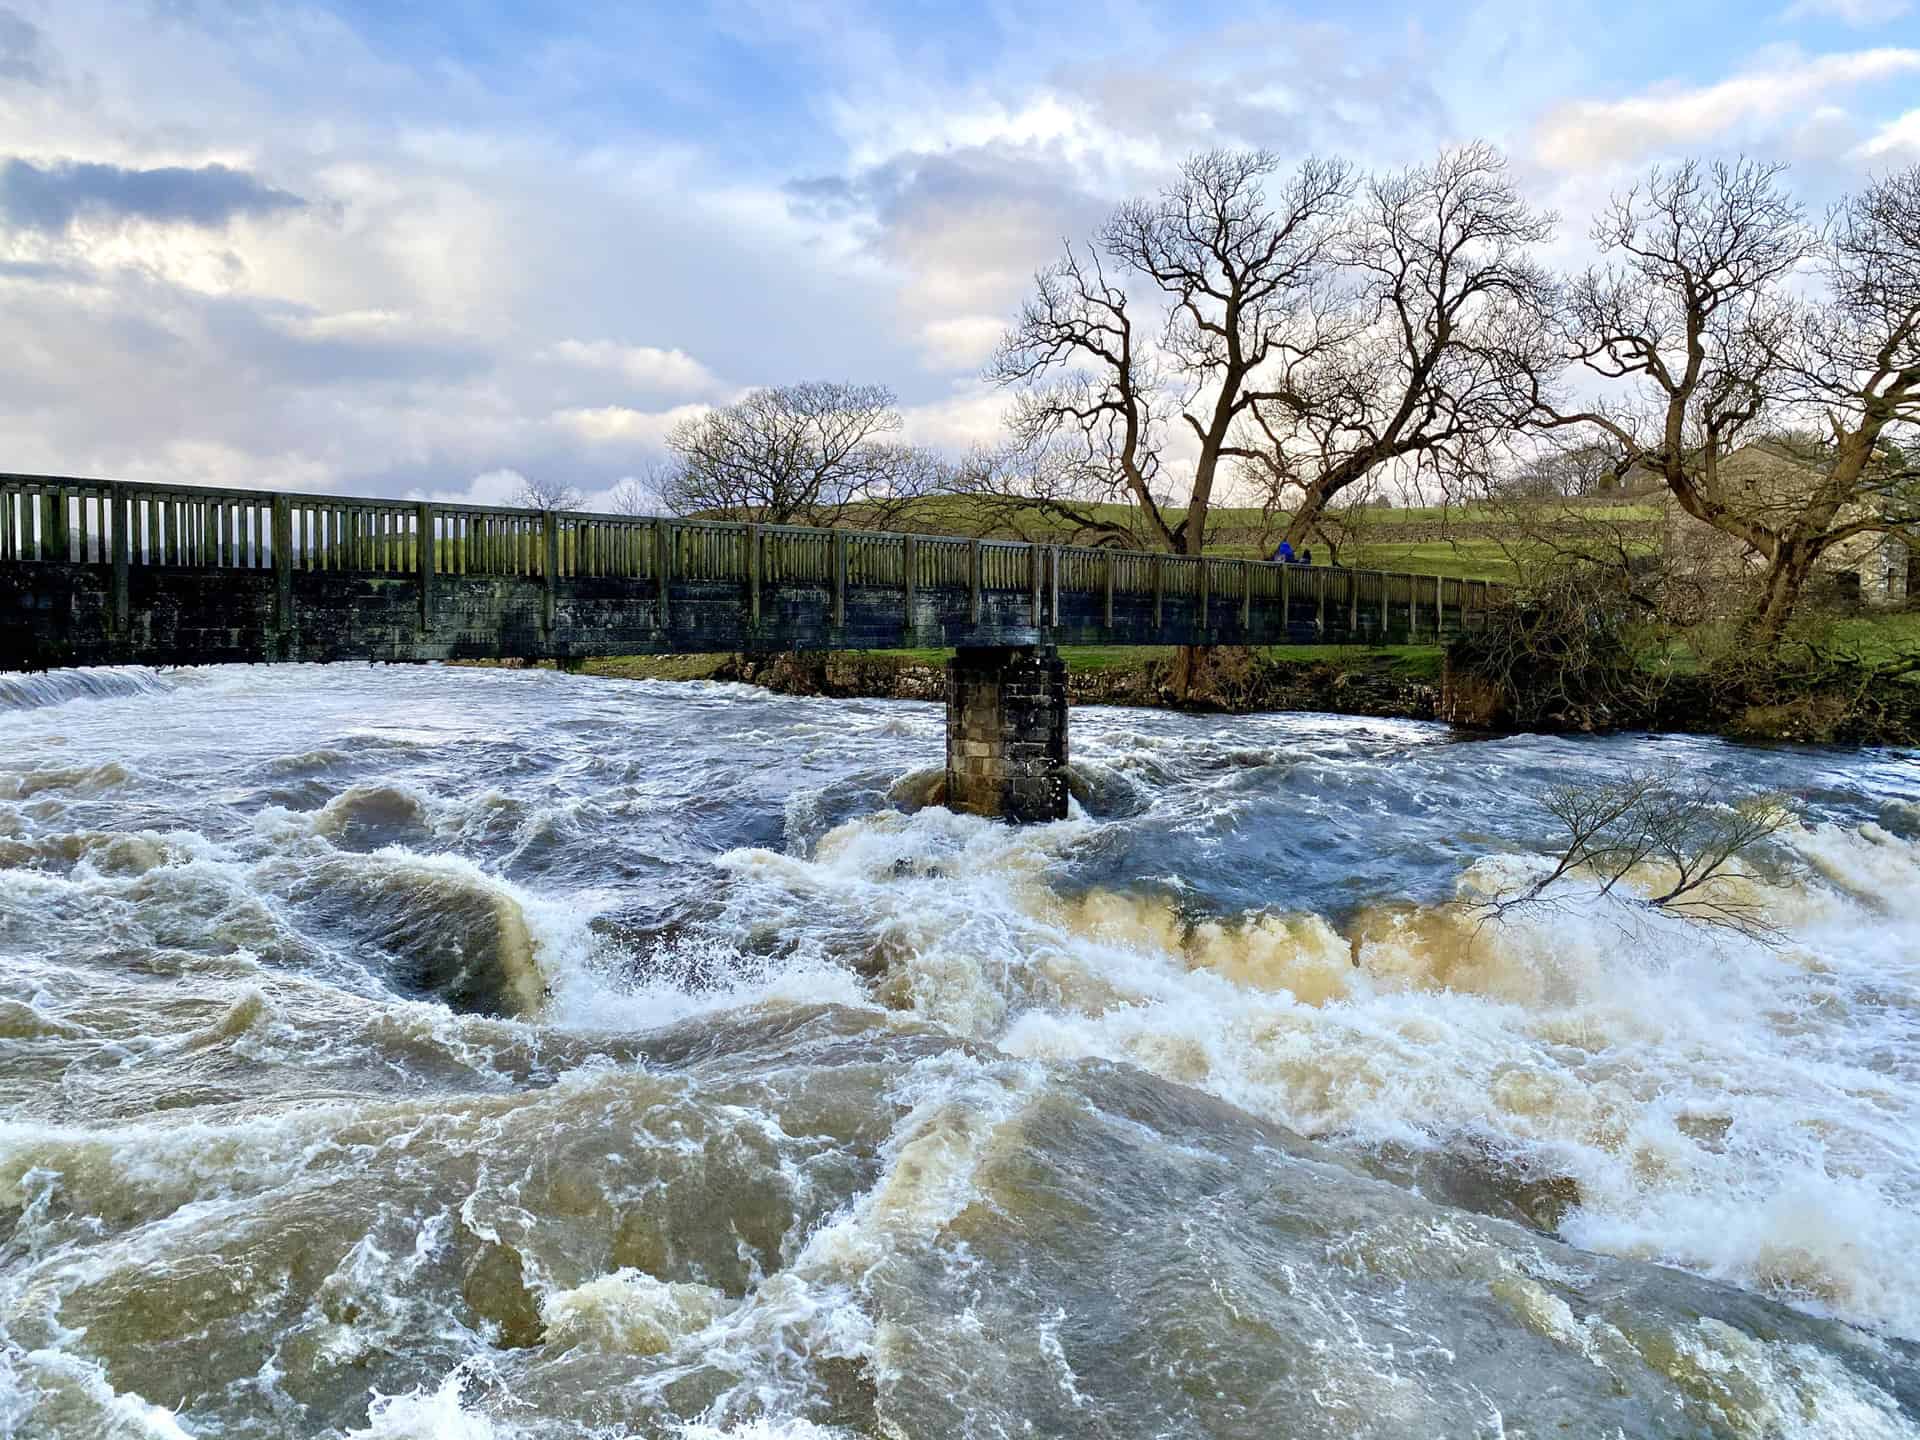 The River Wharfe at Linton Falls, seen by Selina Scott in BBC Winter Walks S1E1.